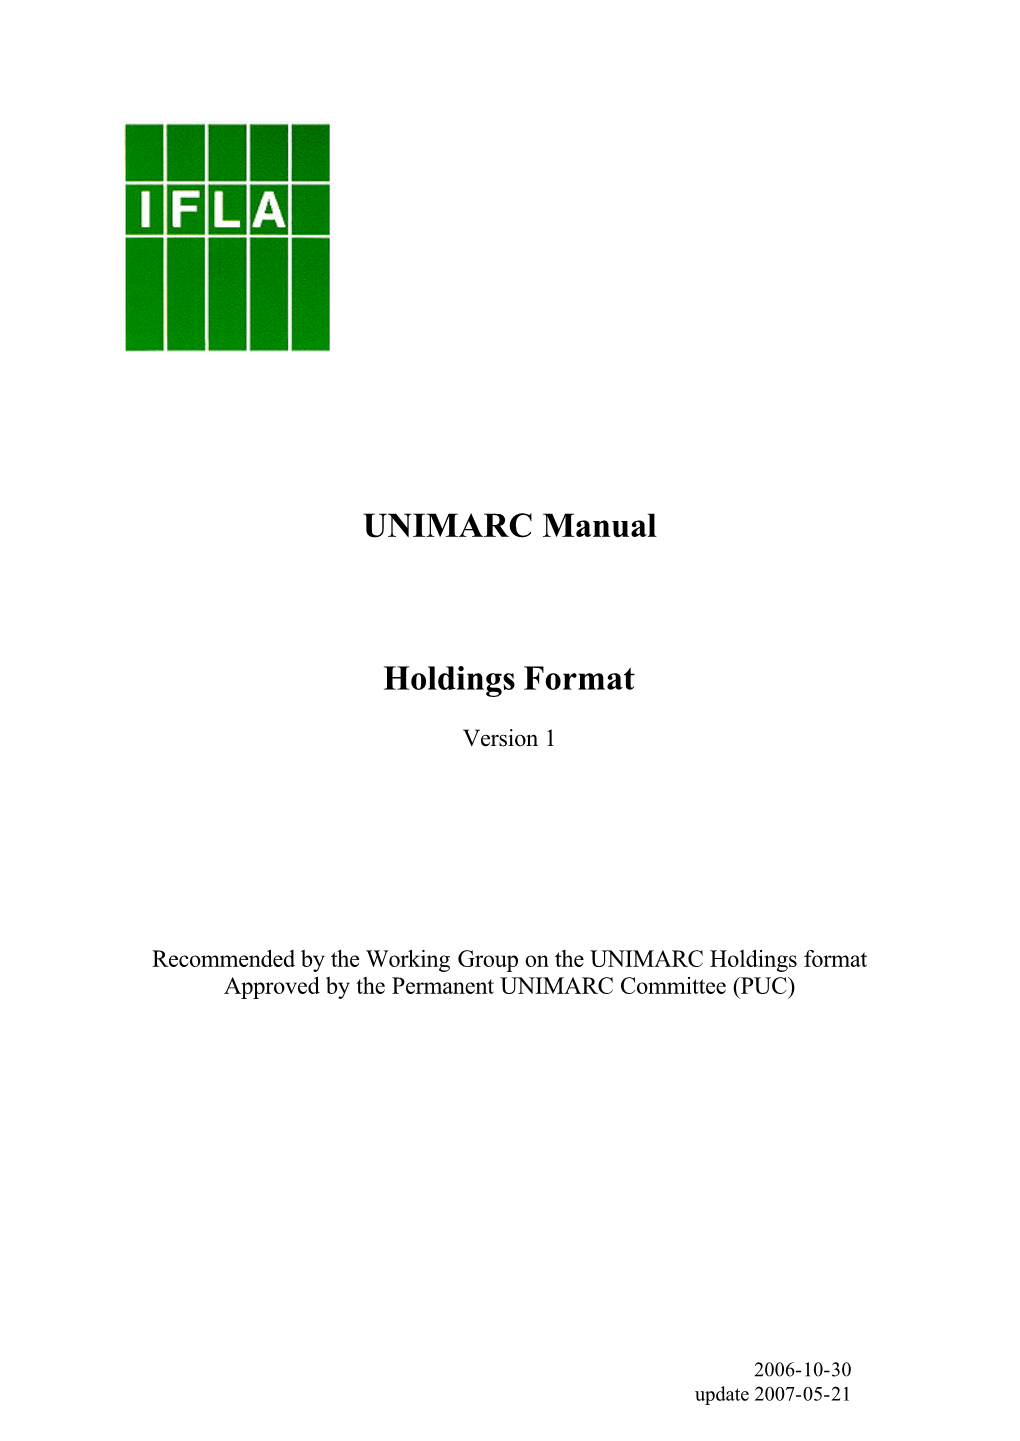 UNIMARC Manual Holdings Format